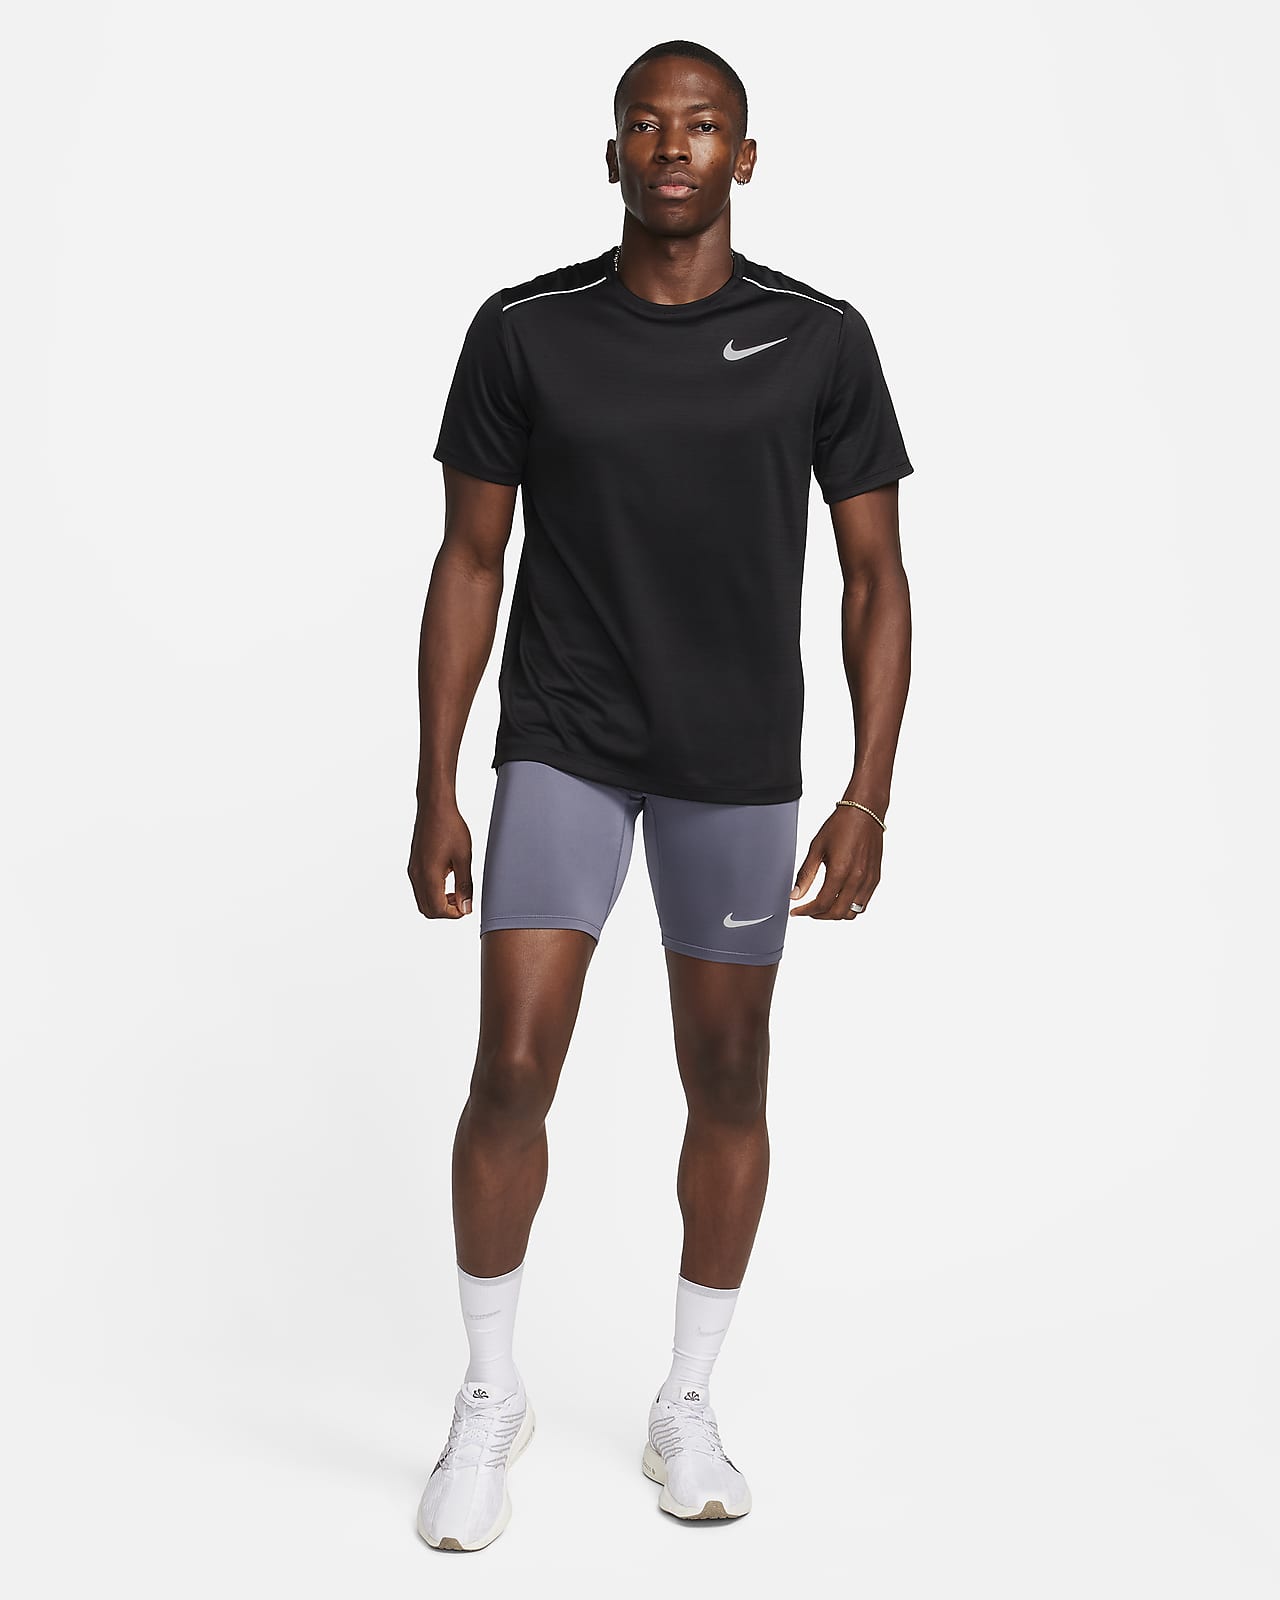 Legging de running demi-longueur avec sous-short Dri-FIT Nike Fast